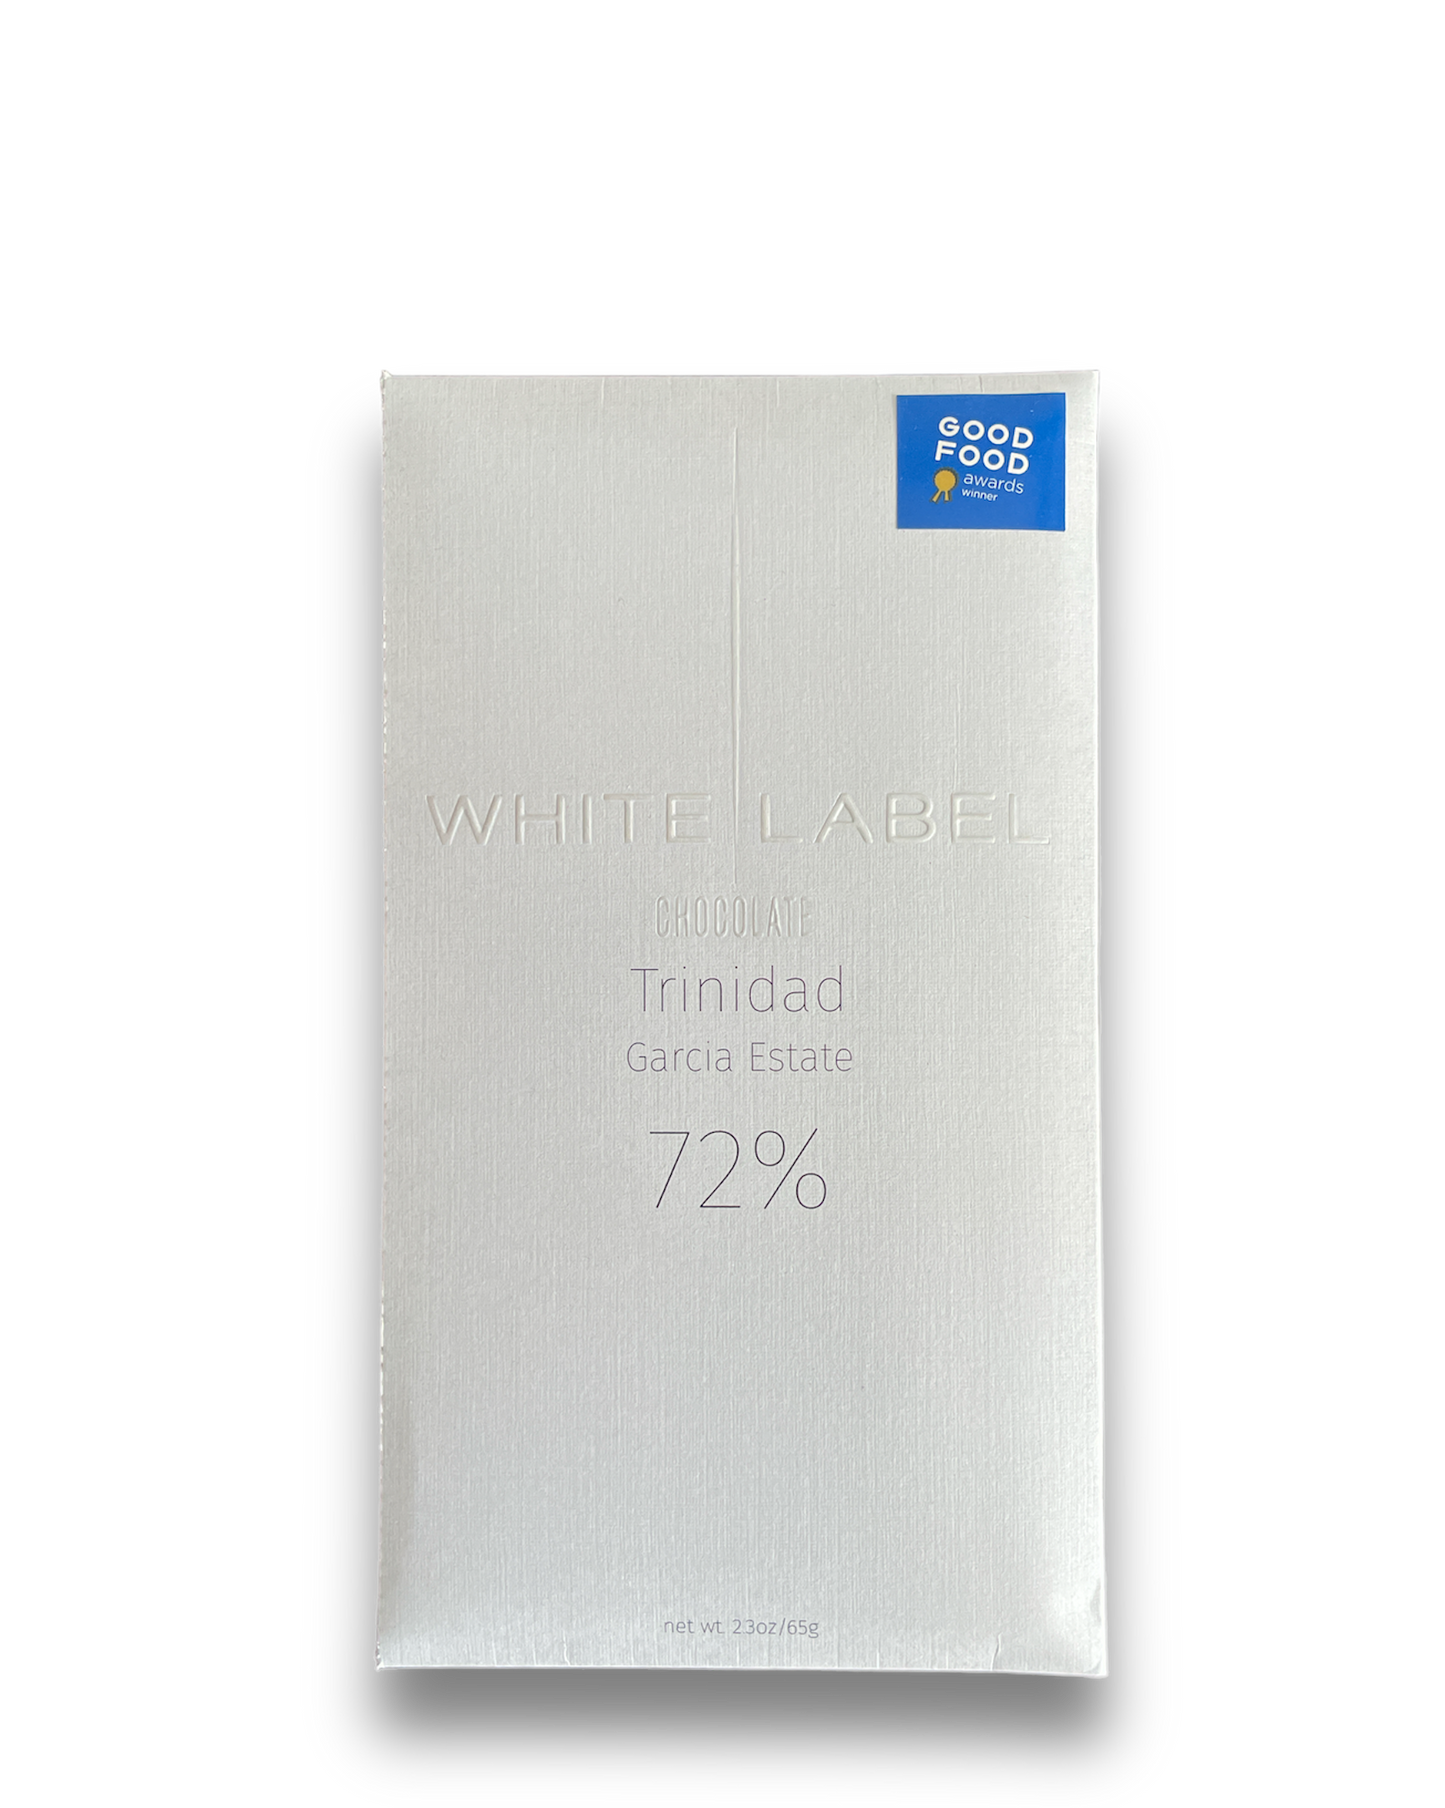 White Label Dark Chocolate 72% - Trinidad - Garcia Estate